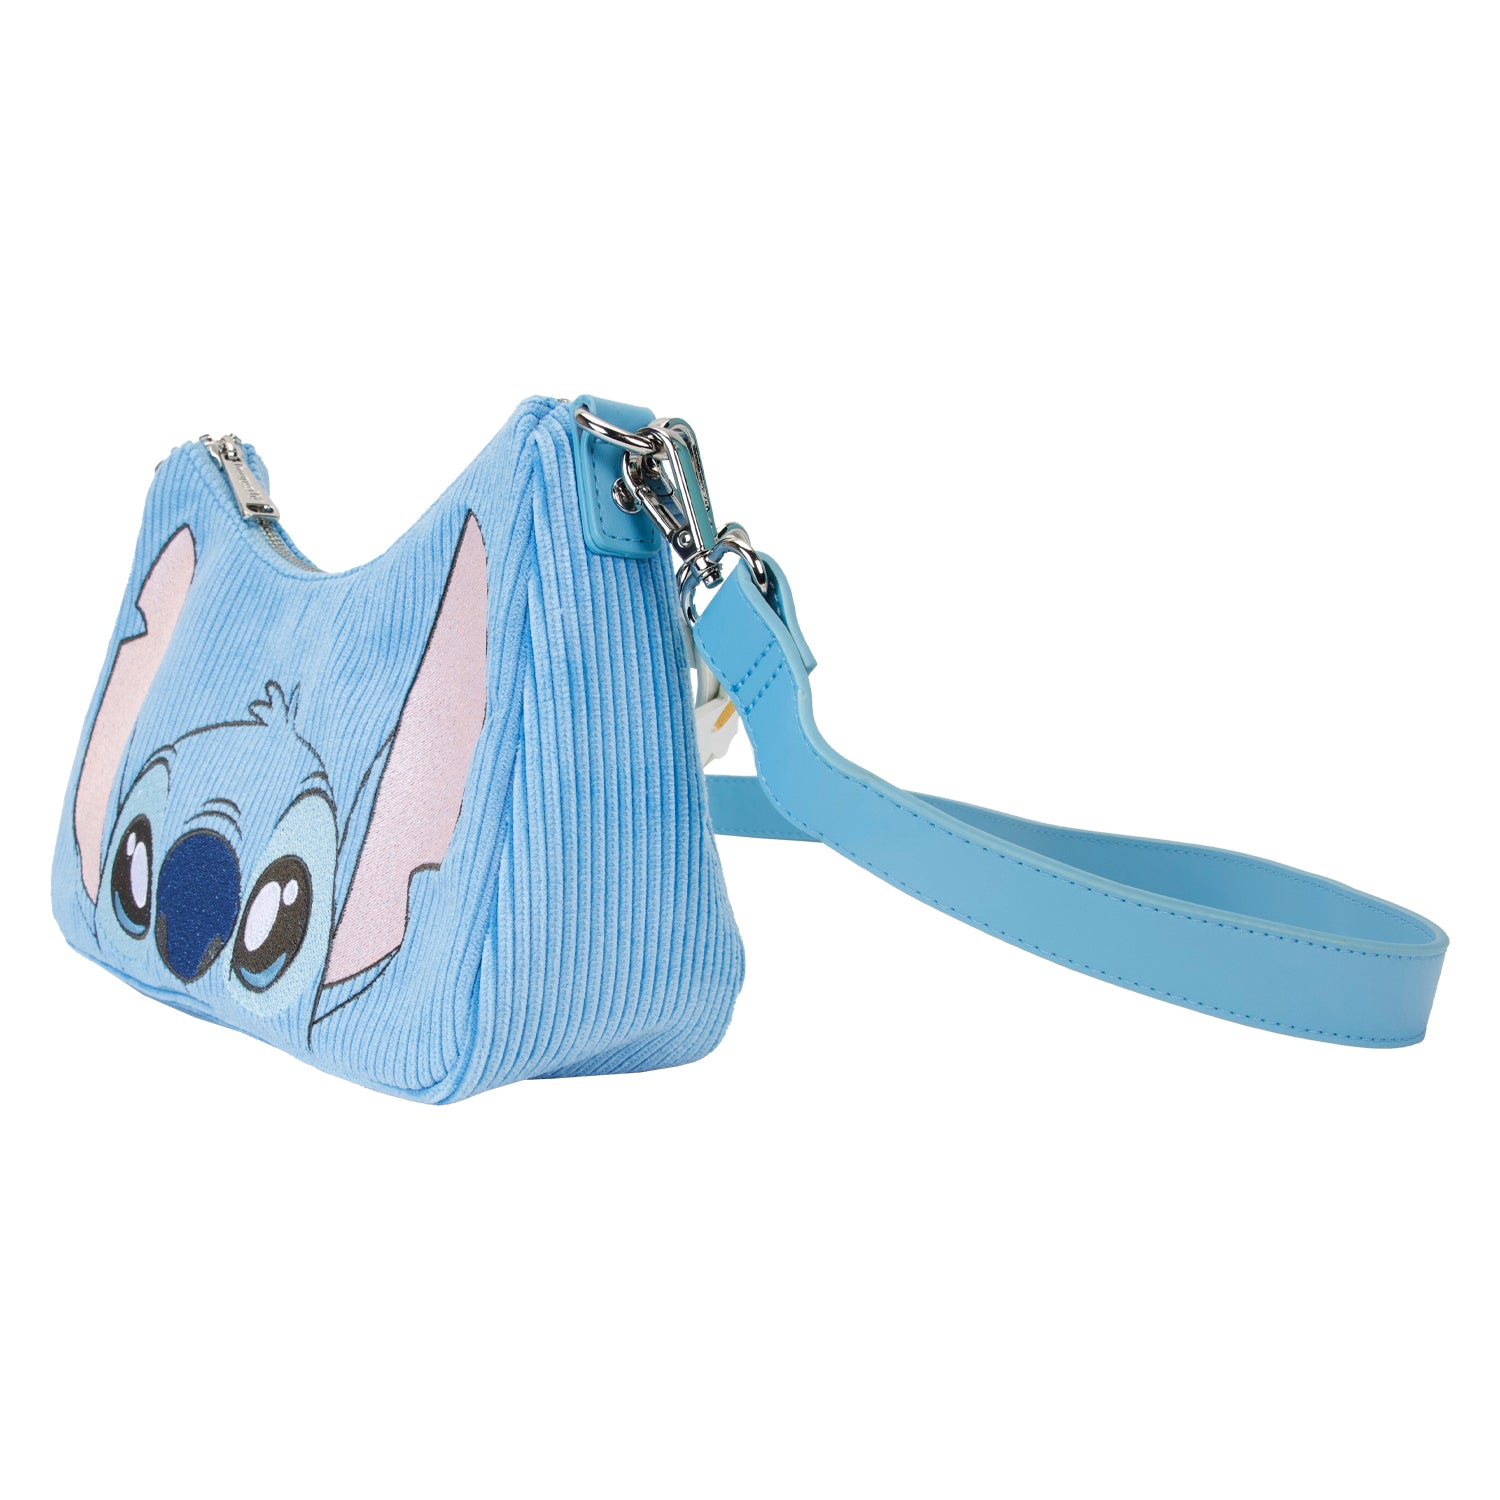 Loungefly x Disney Lilo and Stitch Springtime Daisy Handle Crossbody Bag